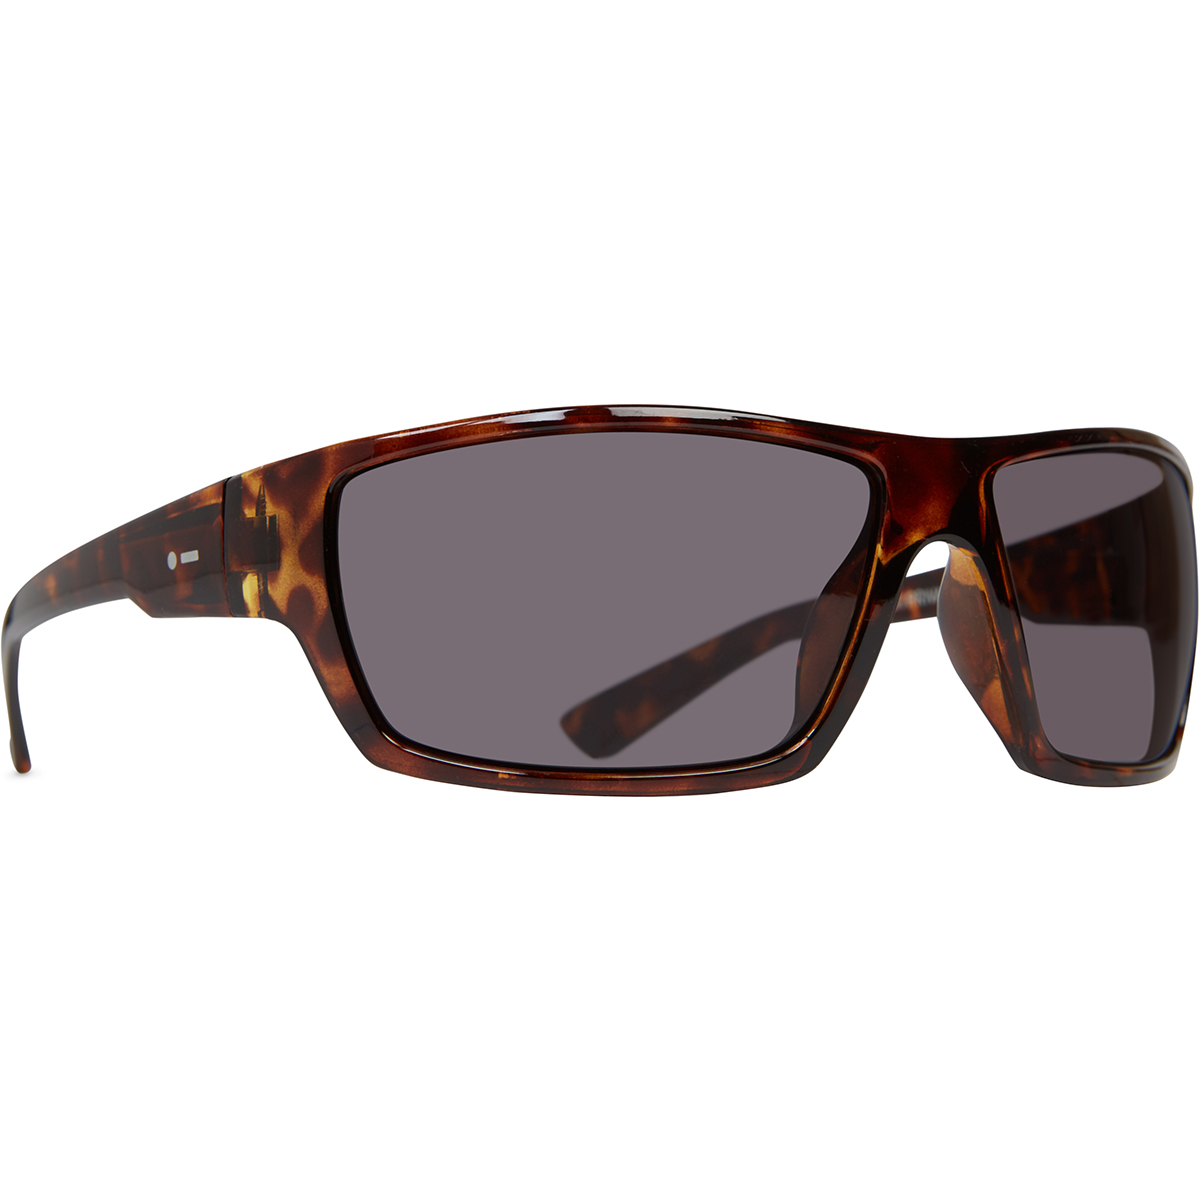 Dot Dash Sunglasses Private Eyes Polarized,OS,Grey/Black - image 1 of 1